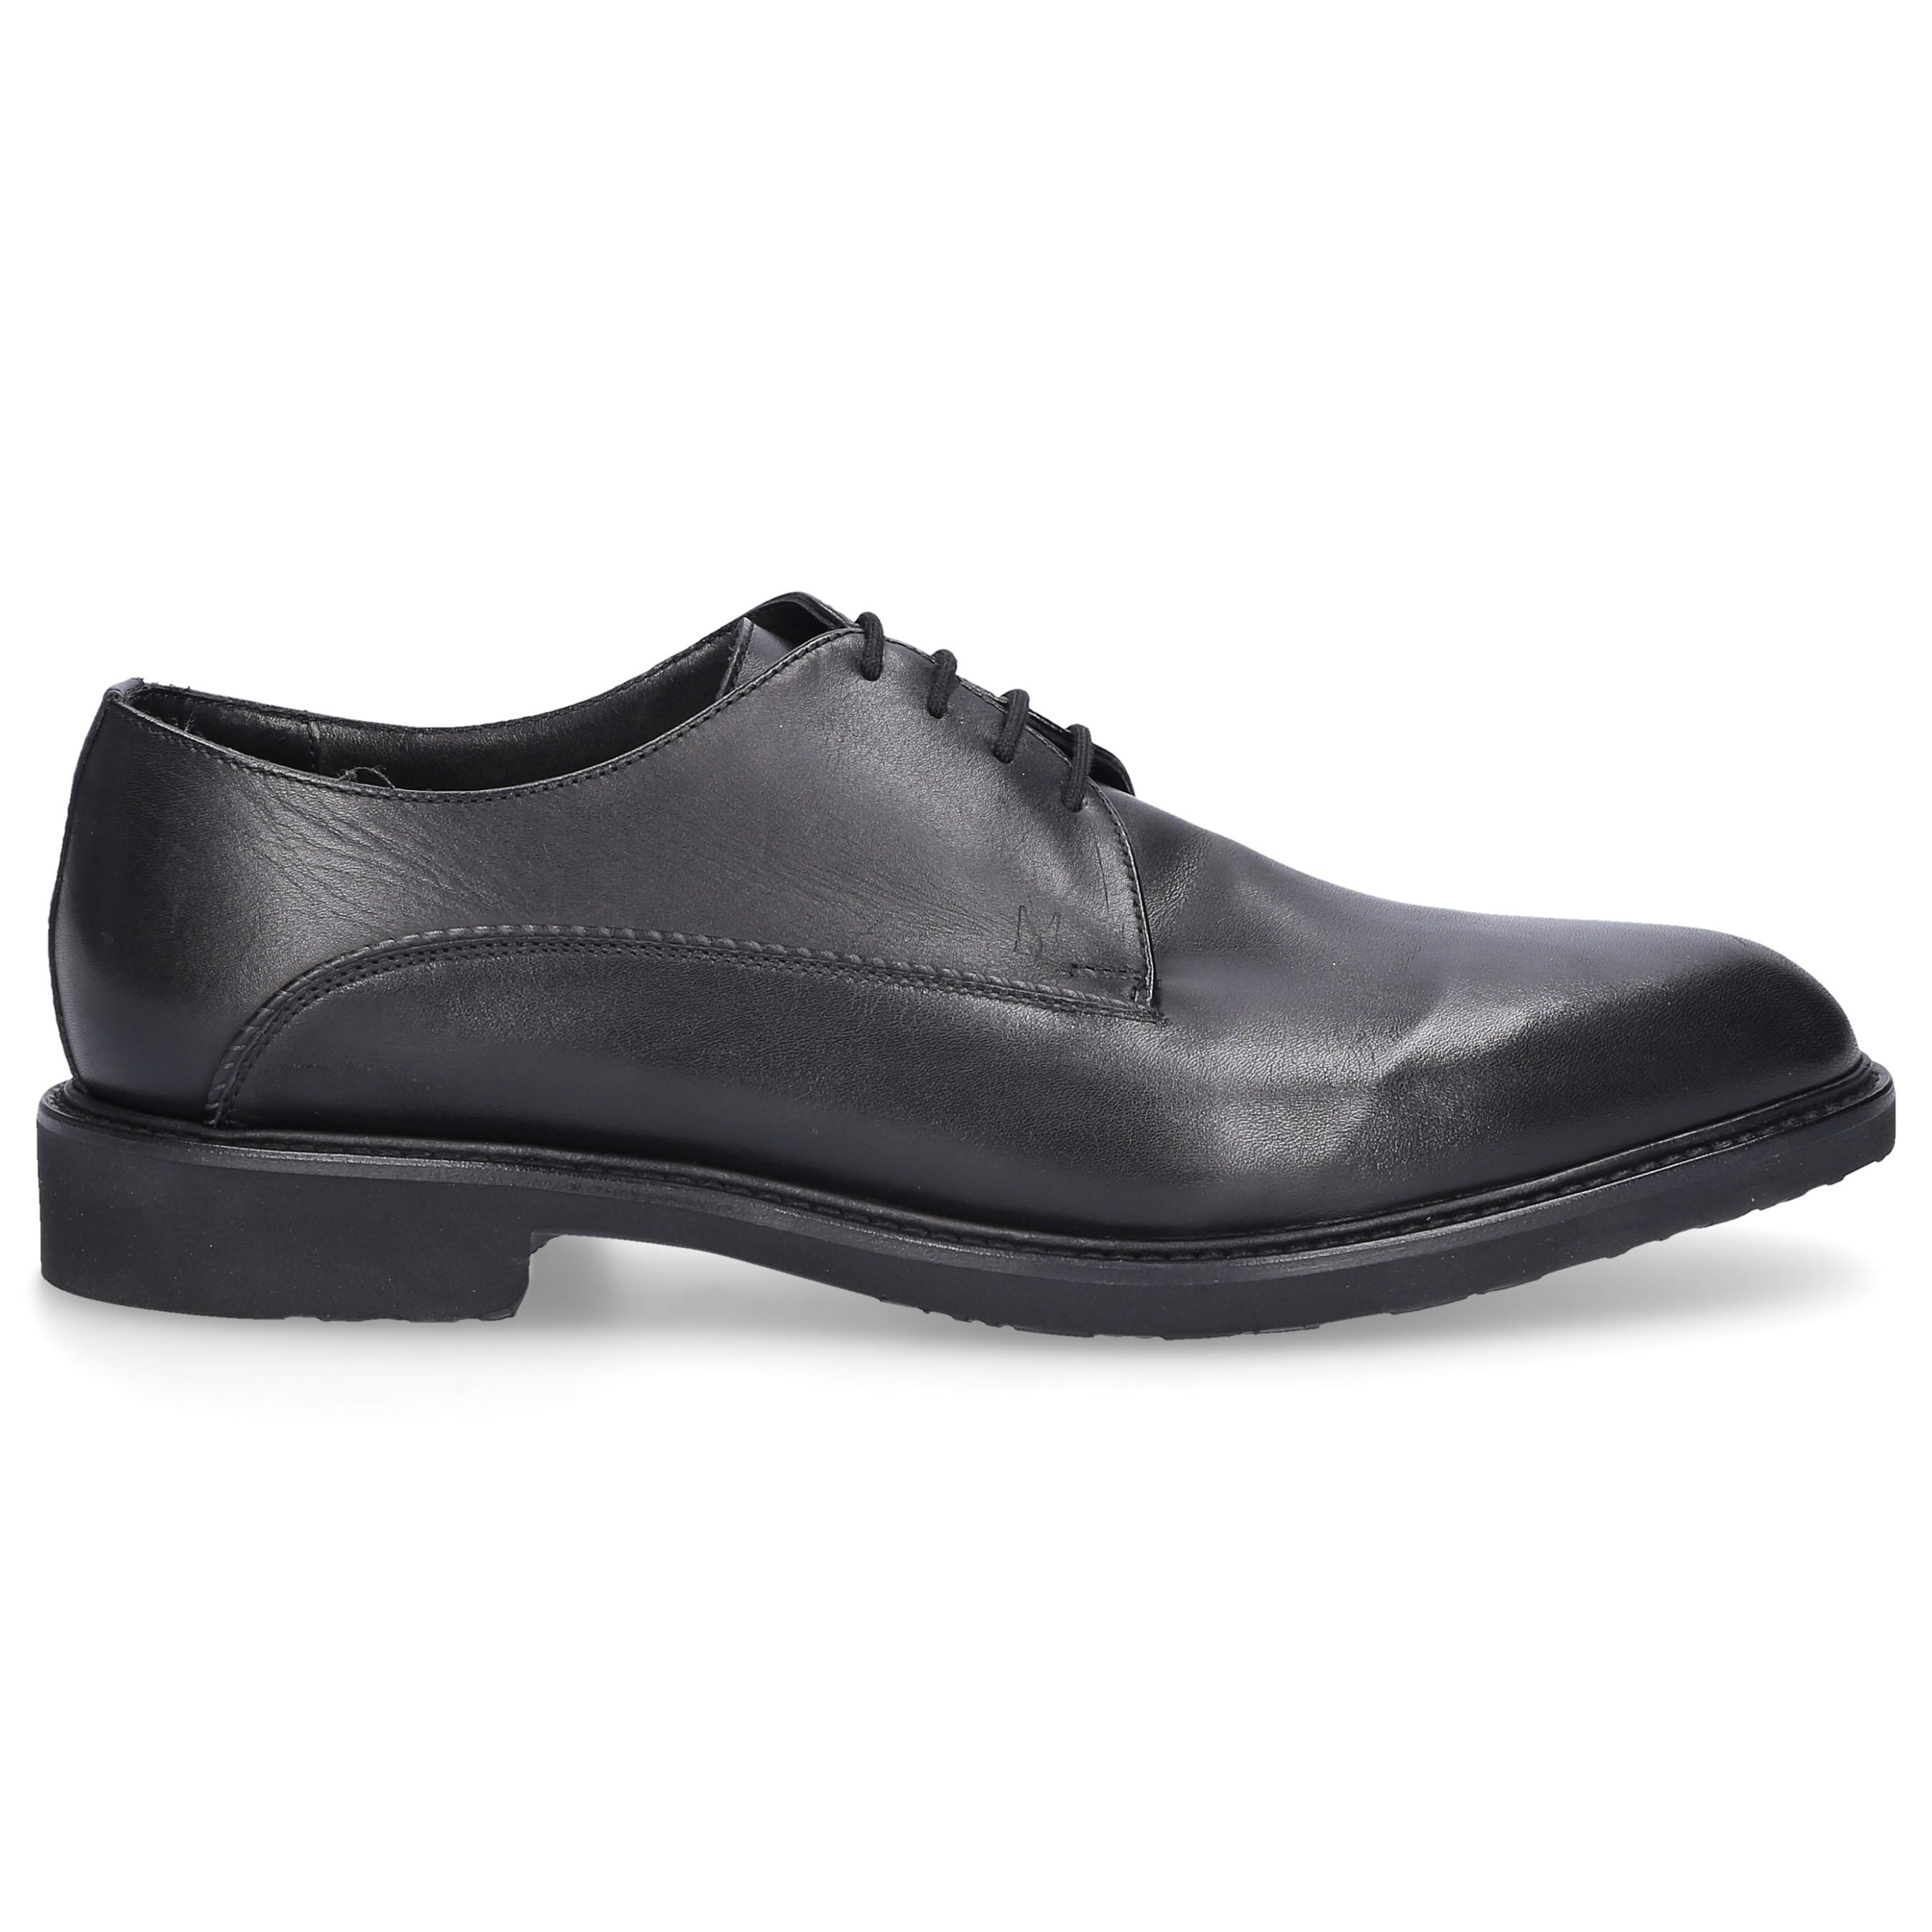 Moreschi Leather Business Shoes 043198 Calfskin Logo Black for Men - Lyst